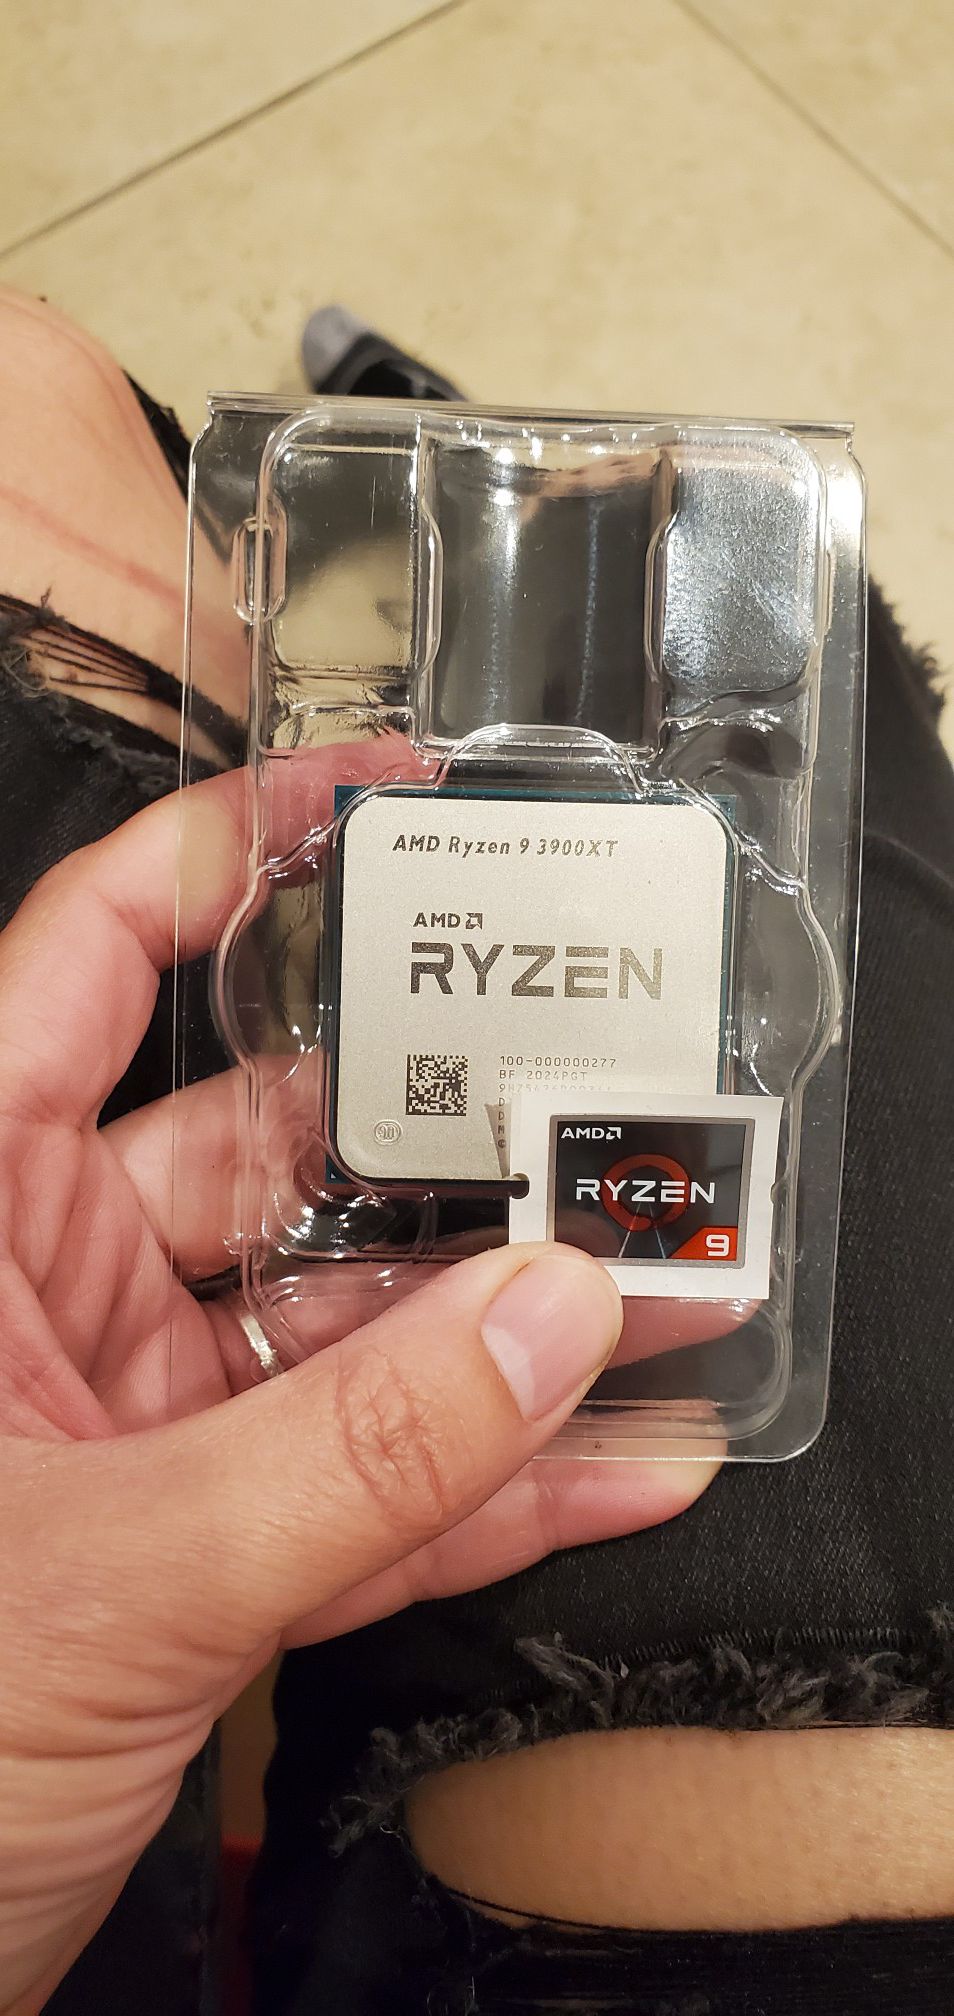 New AMD Ryzen 9 3900XT Desktop Processor